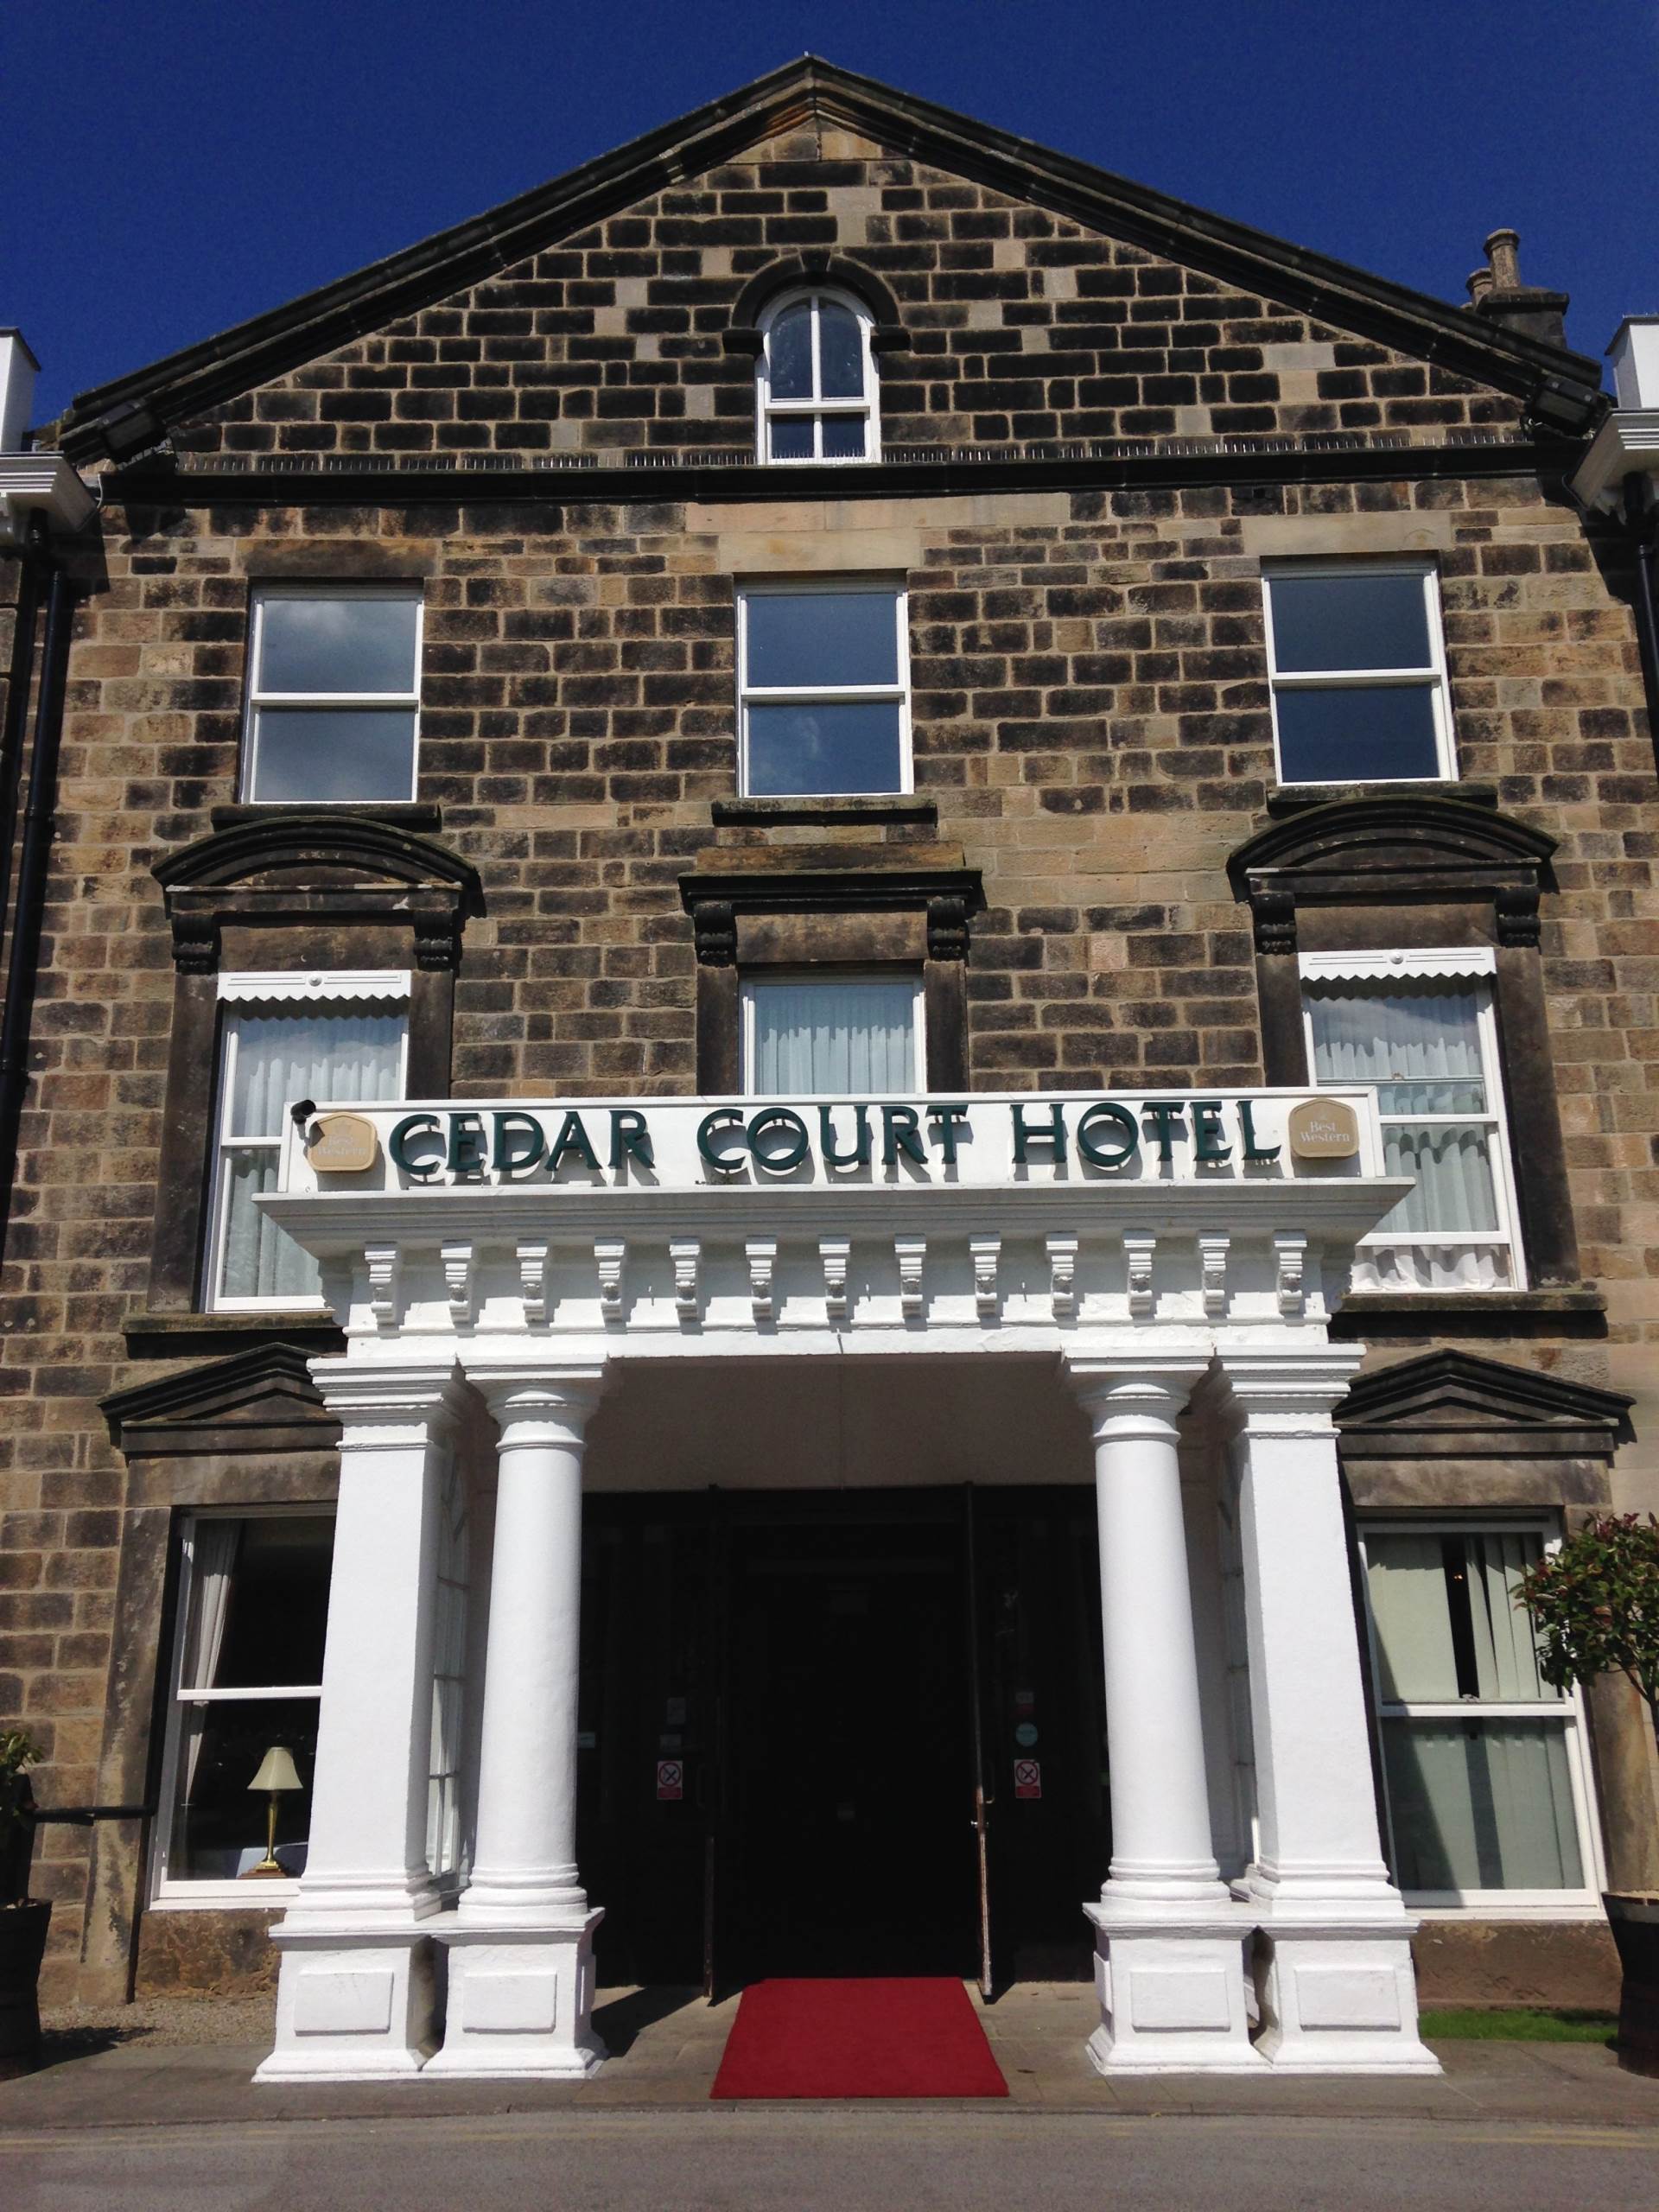 Cedar Court Hotel in Harrogate as featured on The National Vintage Wedding Fair blog